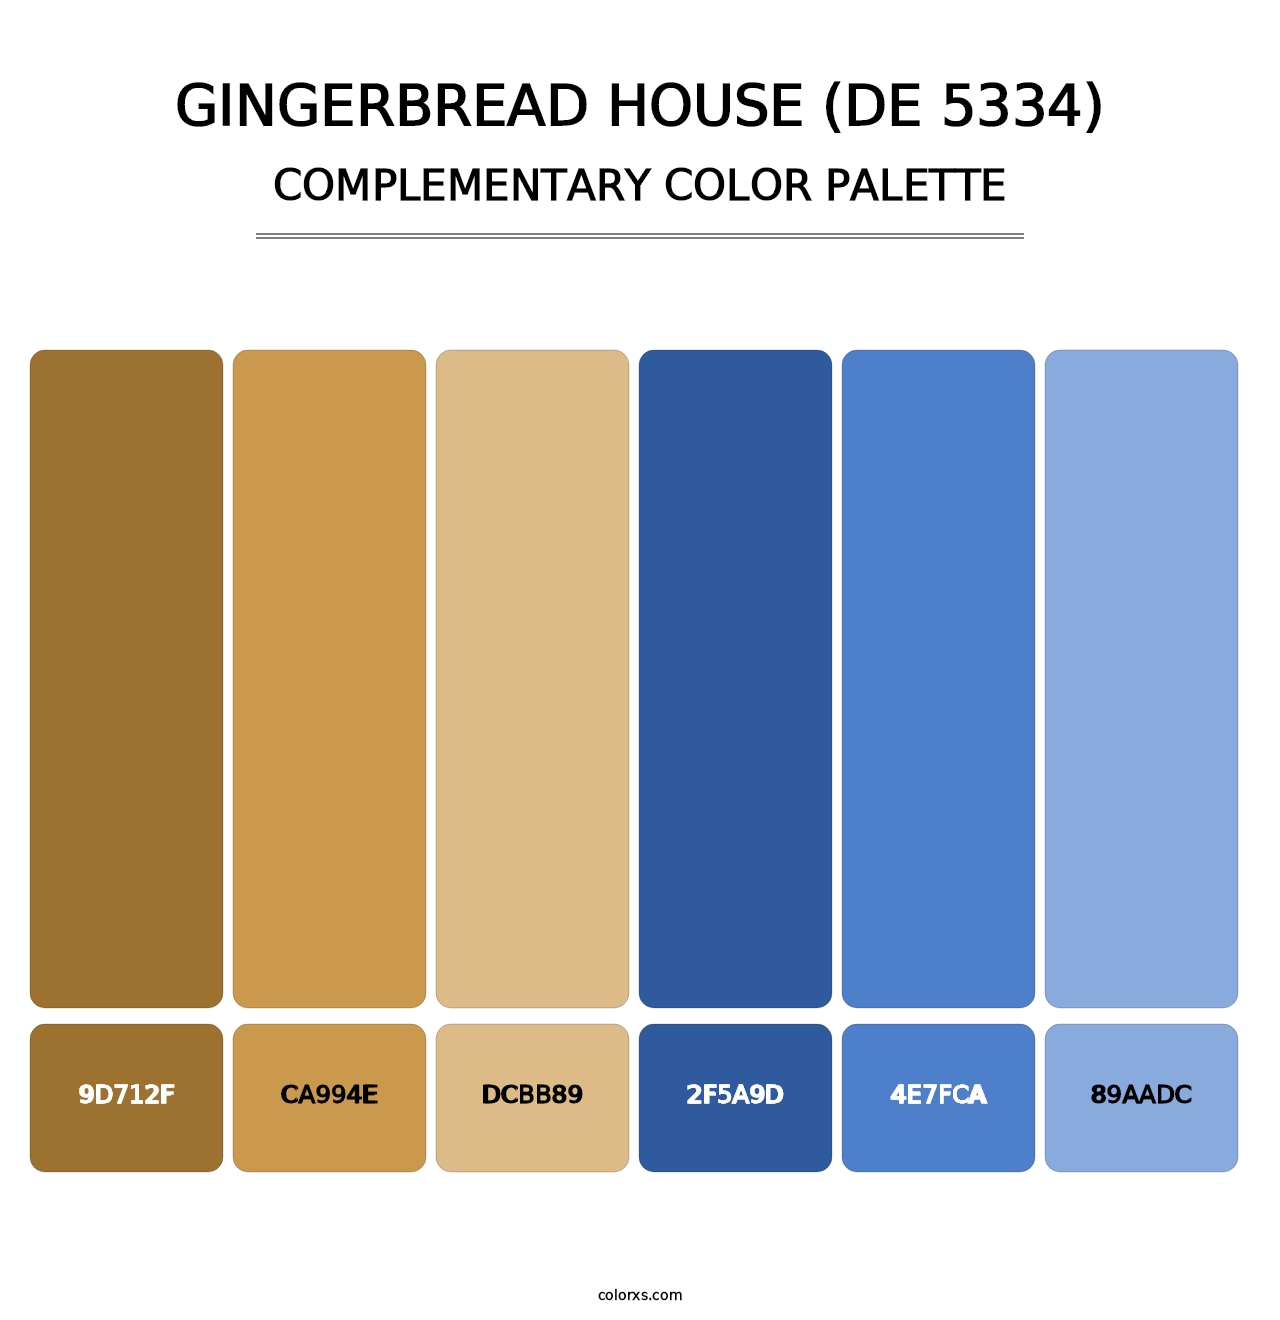 Gingerbread House (DE 5334) - Complementary Color Palette